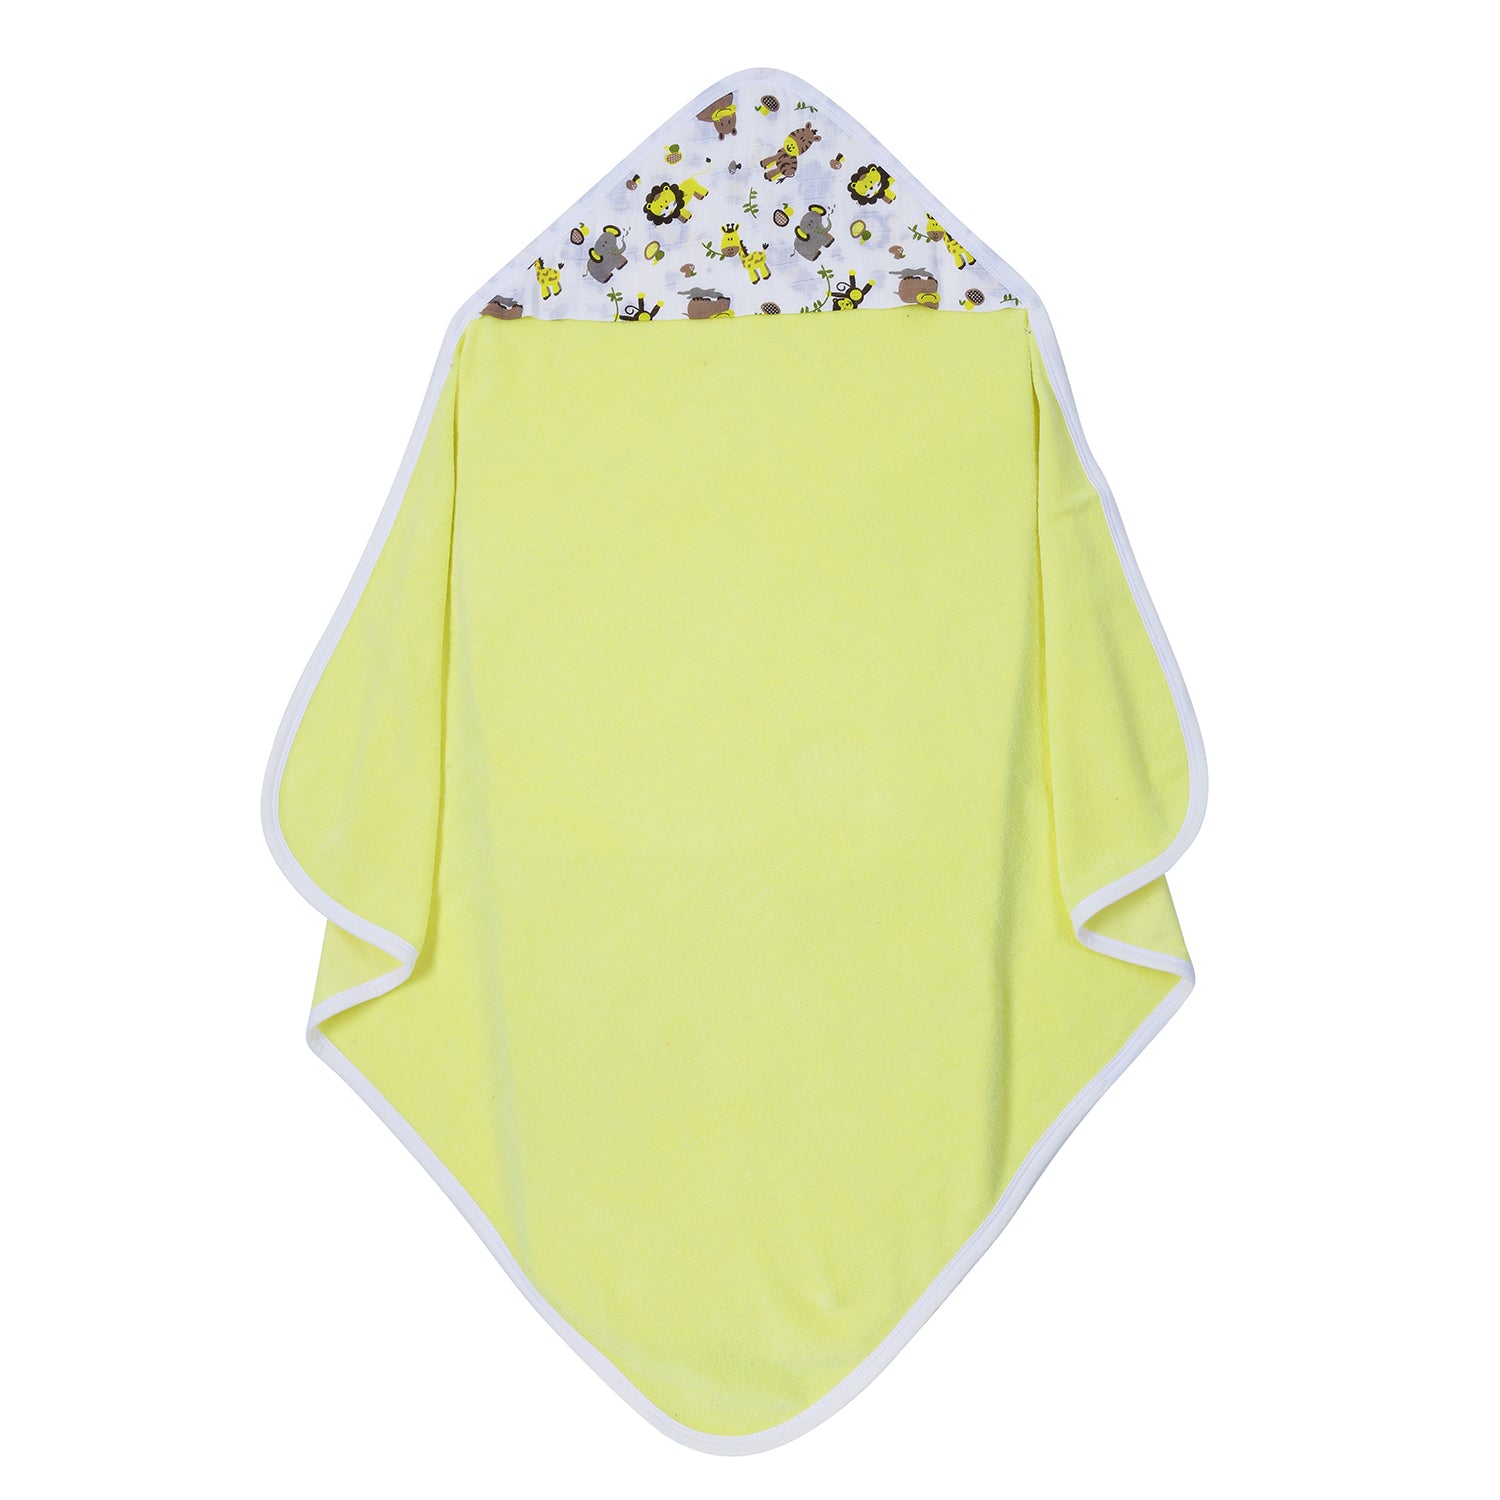 My Milestones 100% Premium Cotton Single Layered Terry Hooded Baby / Toddlers Bath Towel - Lemon Yellow Solid